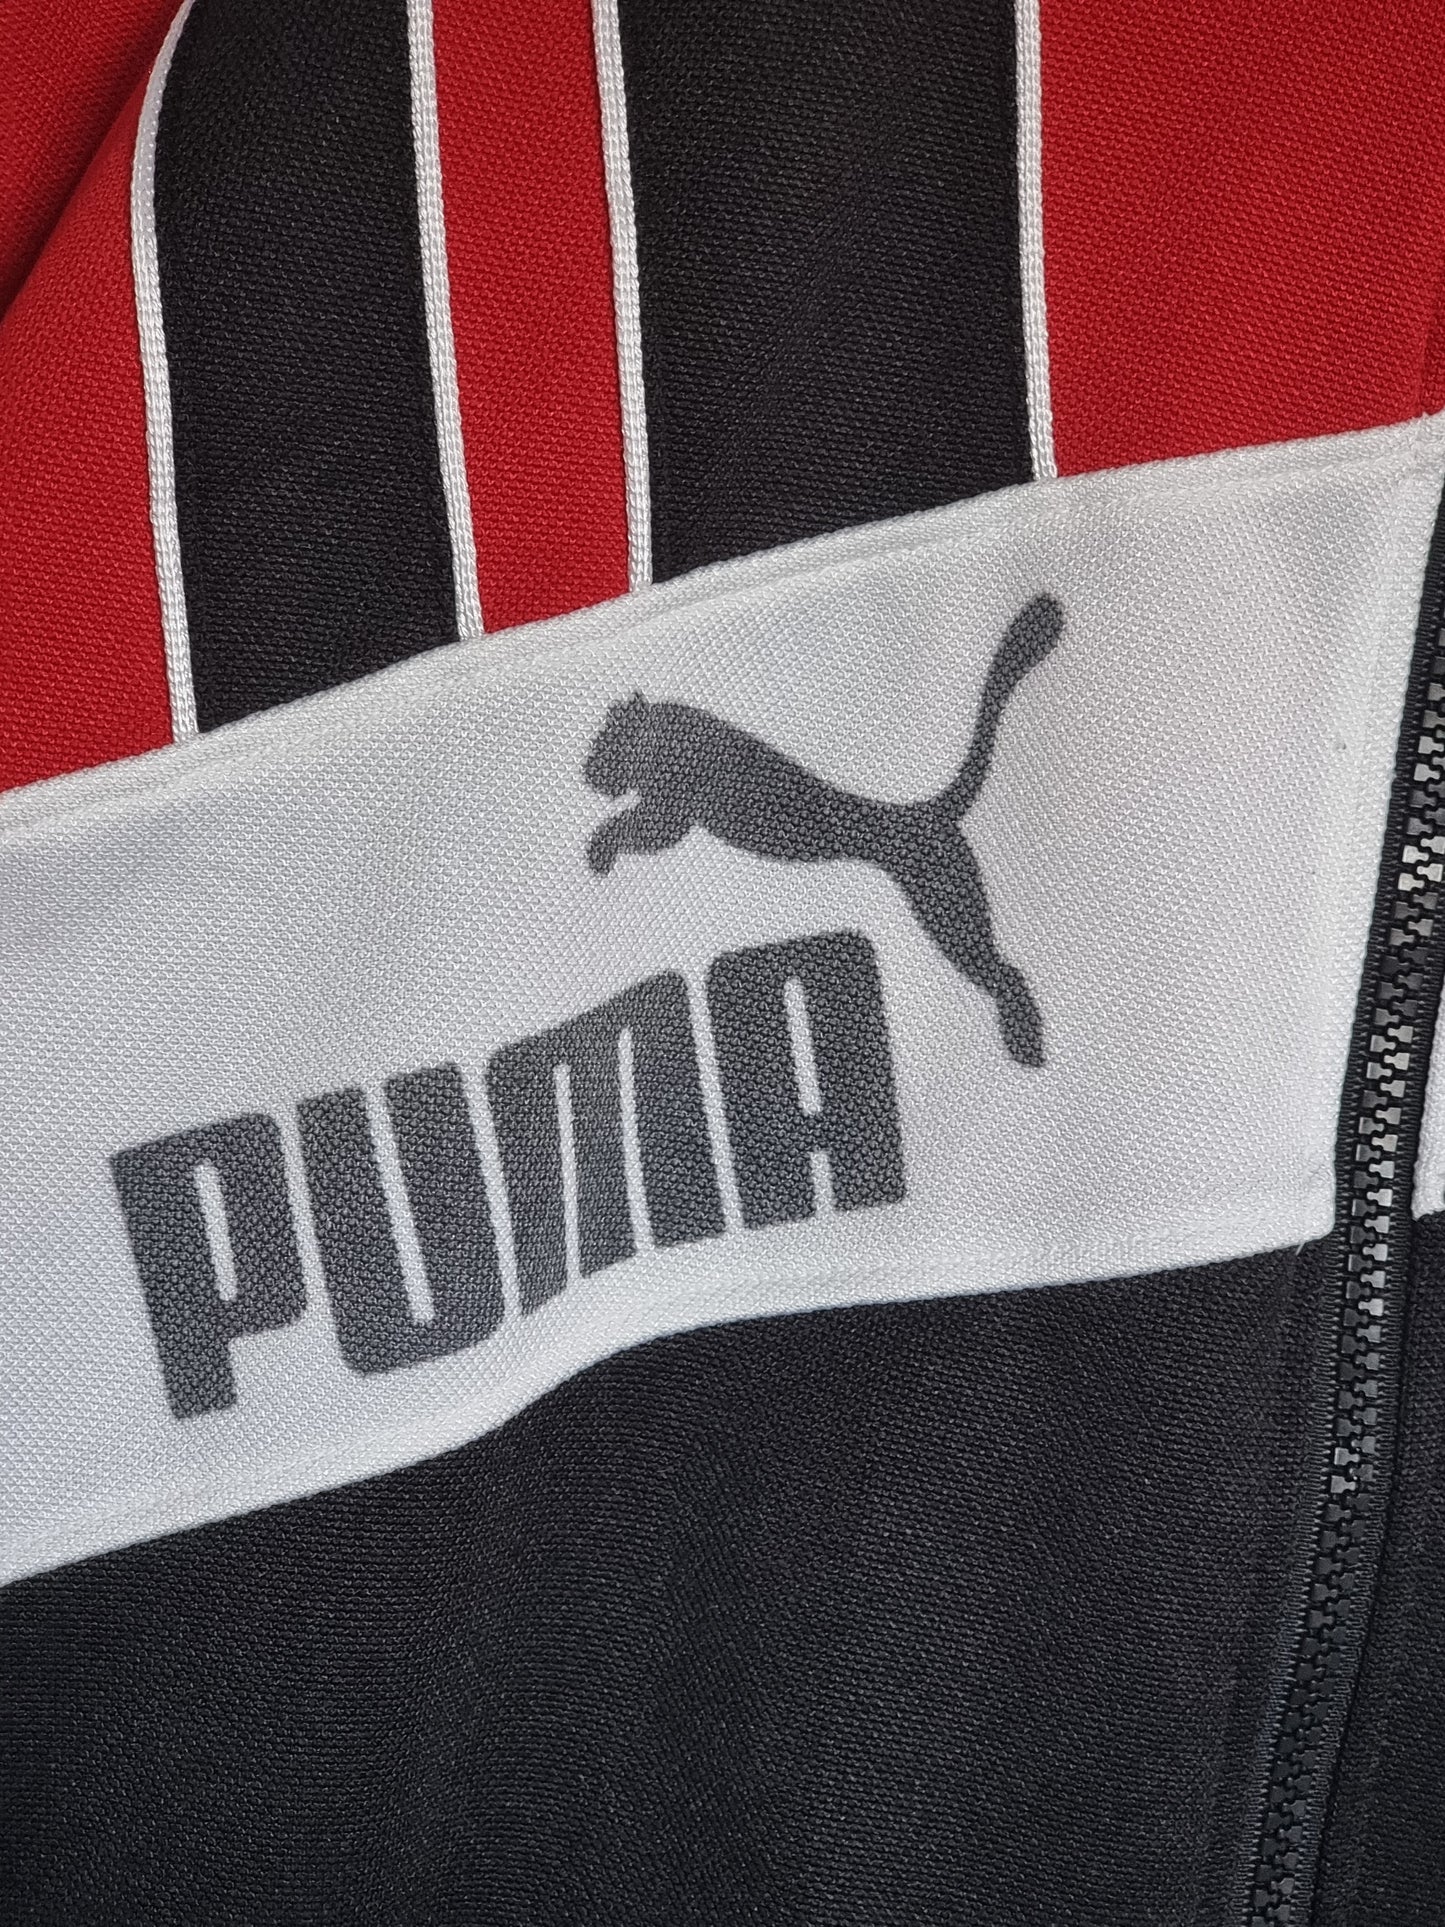 Puma Mitsubishi Urawa 1992 Track Jacket Large